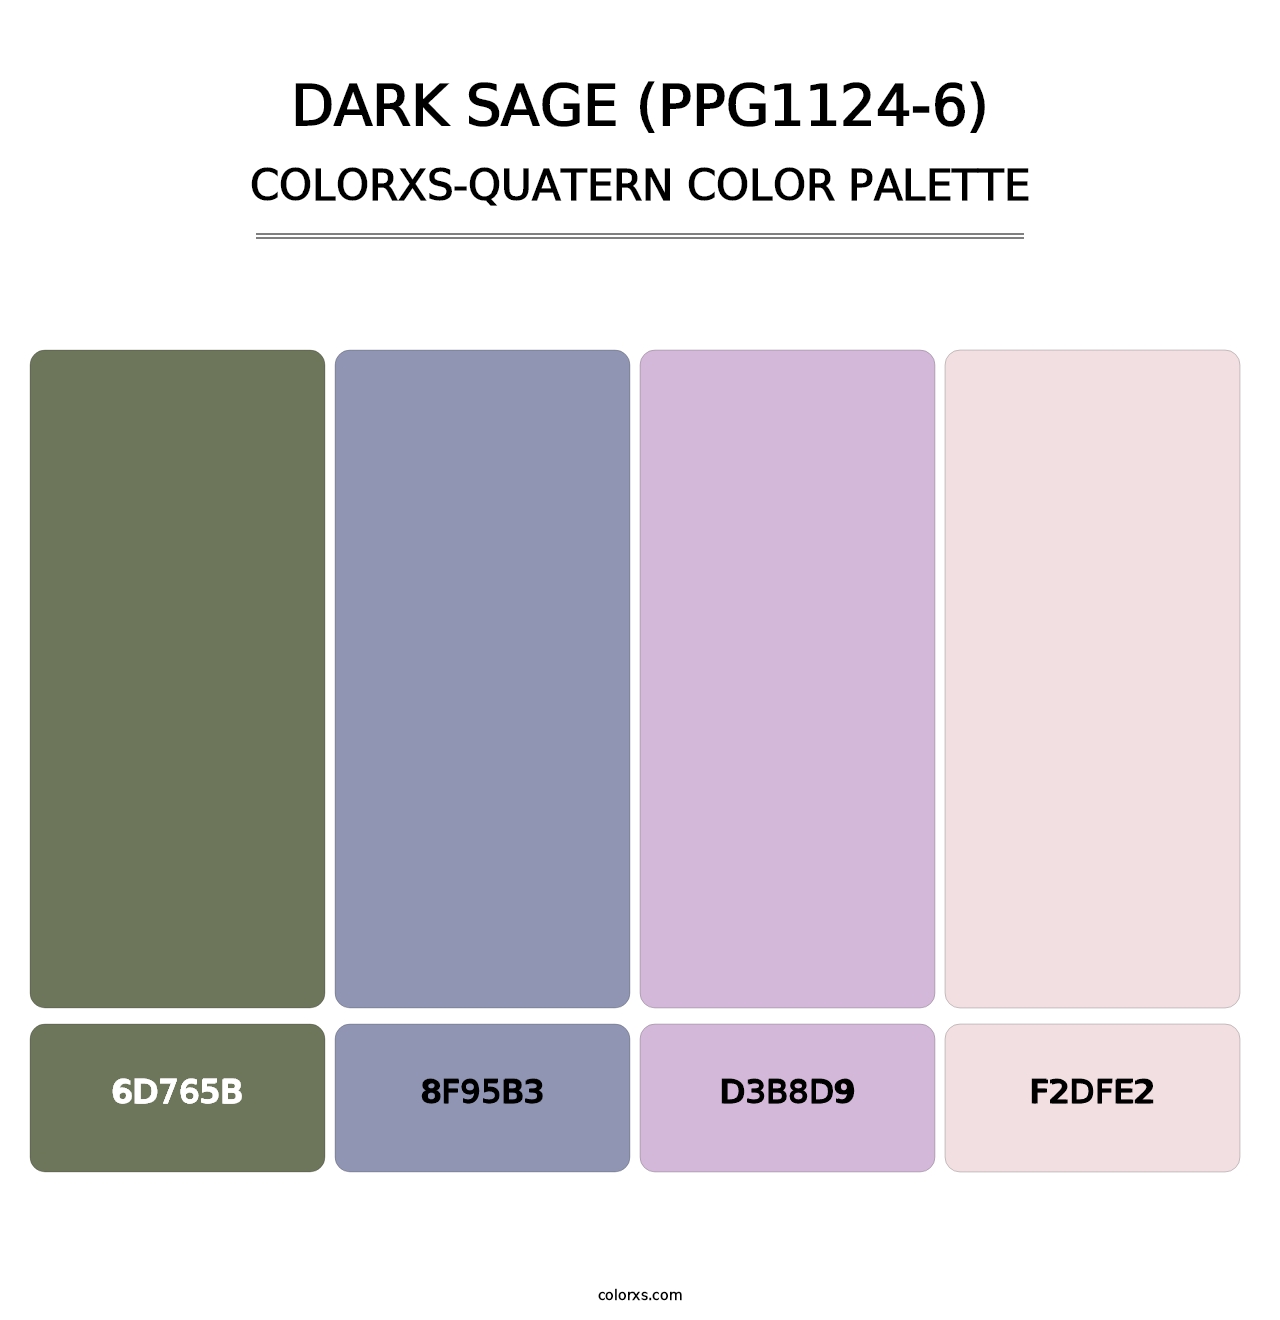 Dark Sage (PPG1124-6) - Colorxs Quatern Palette